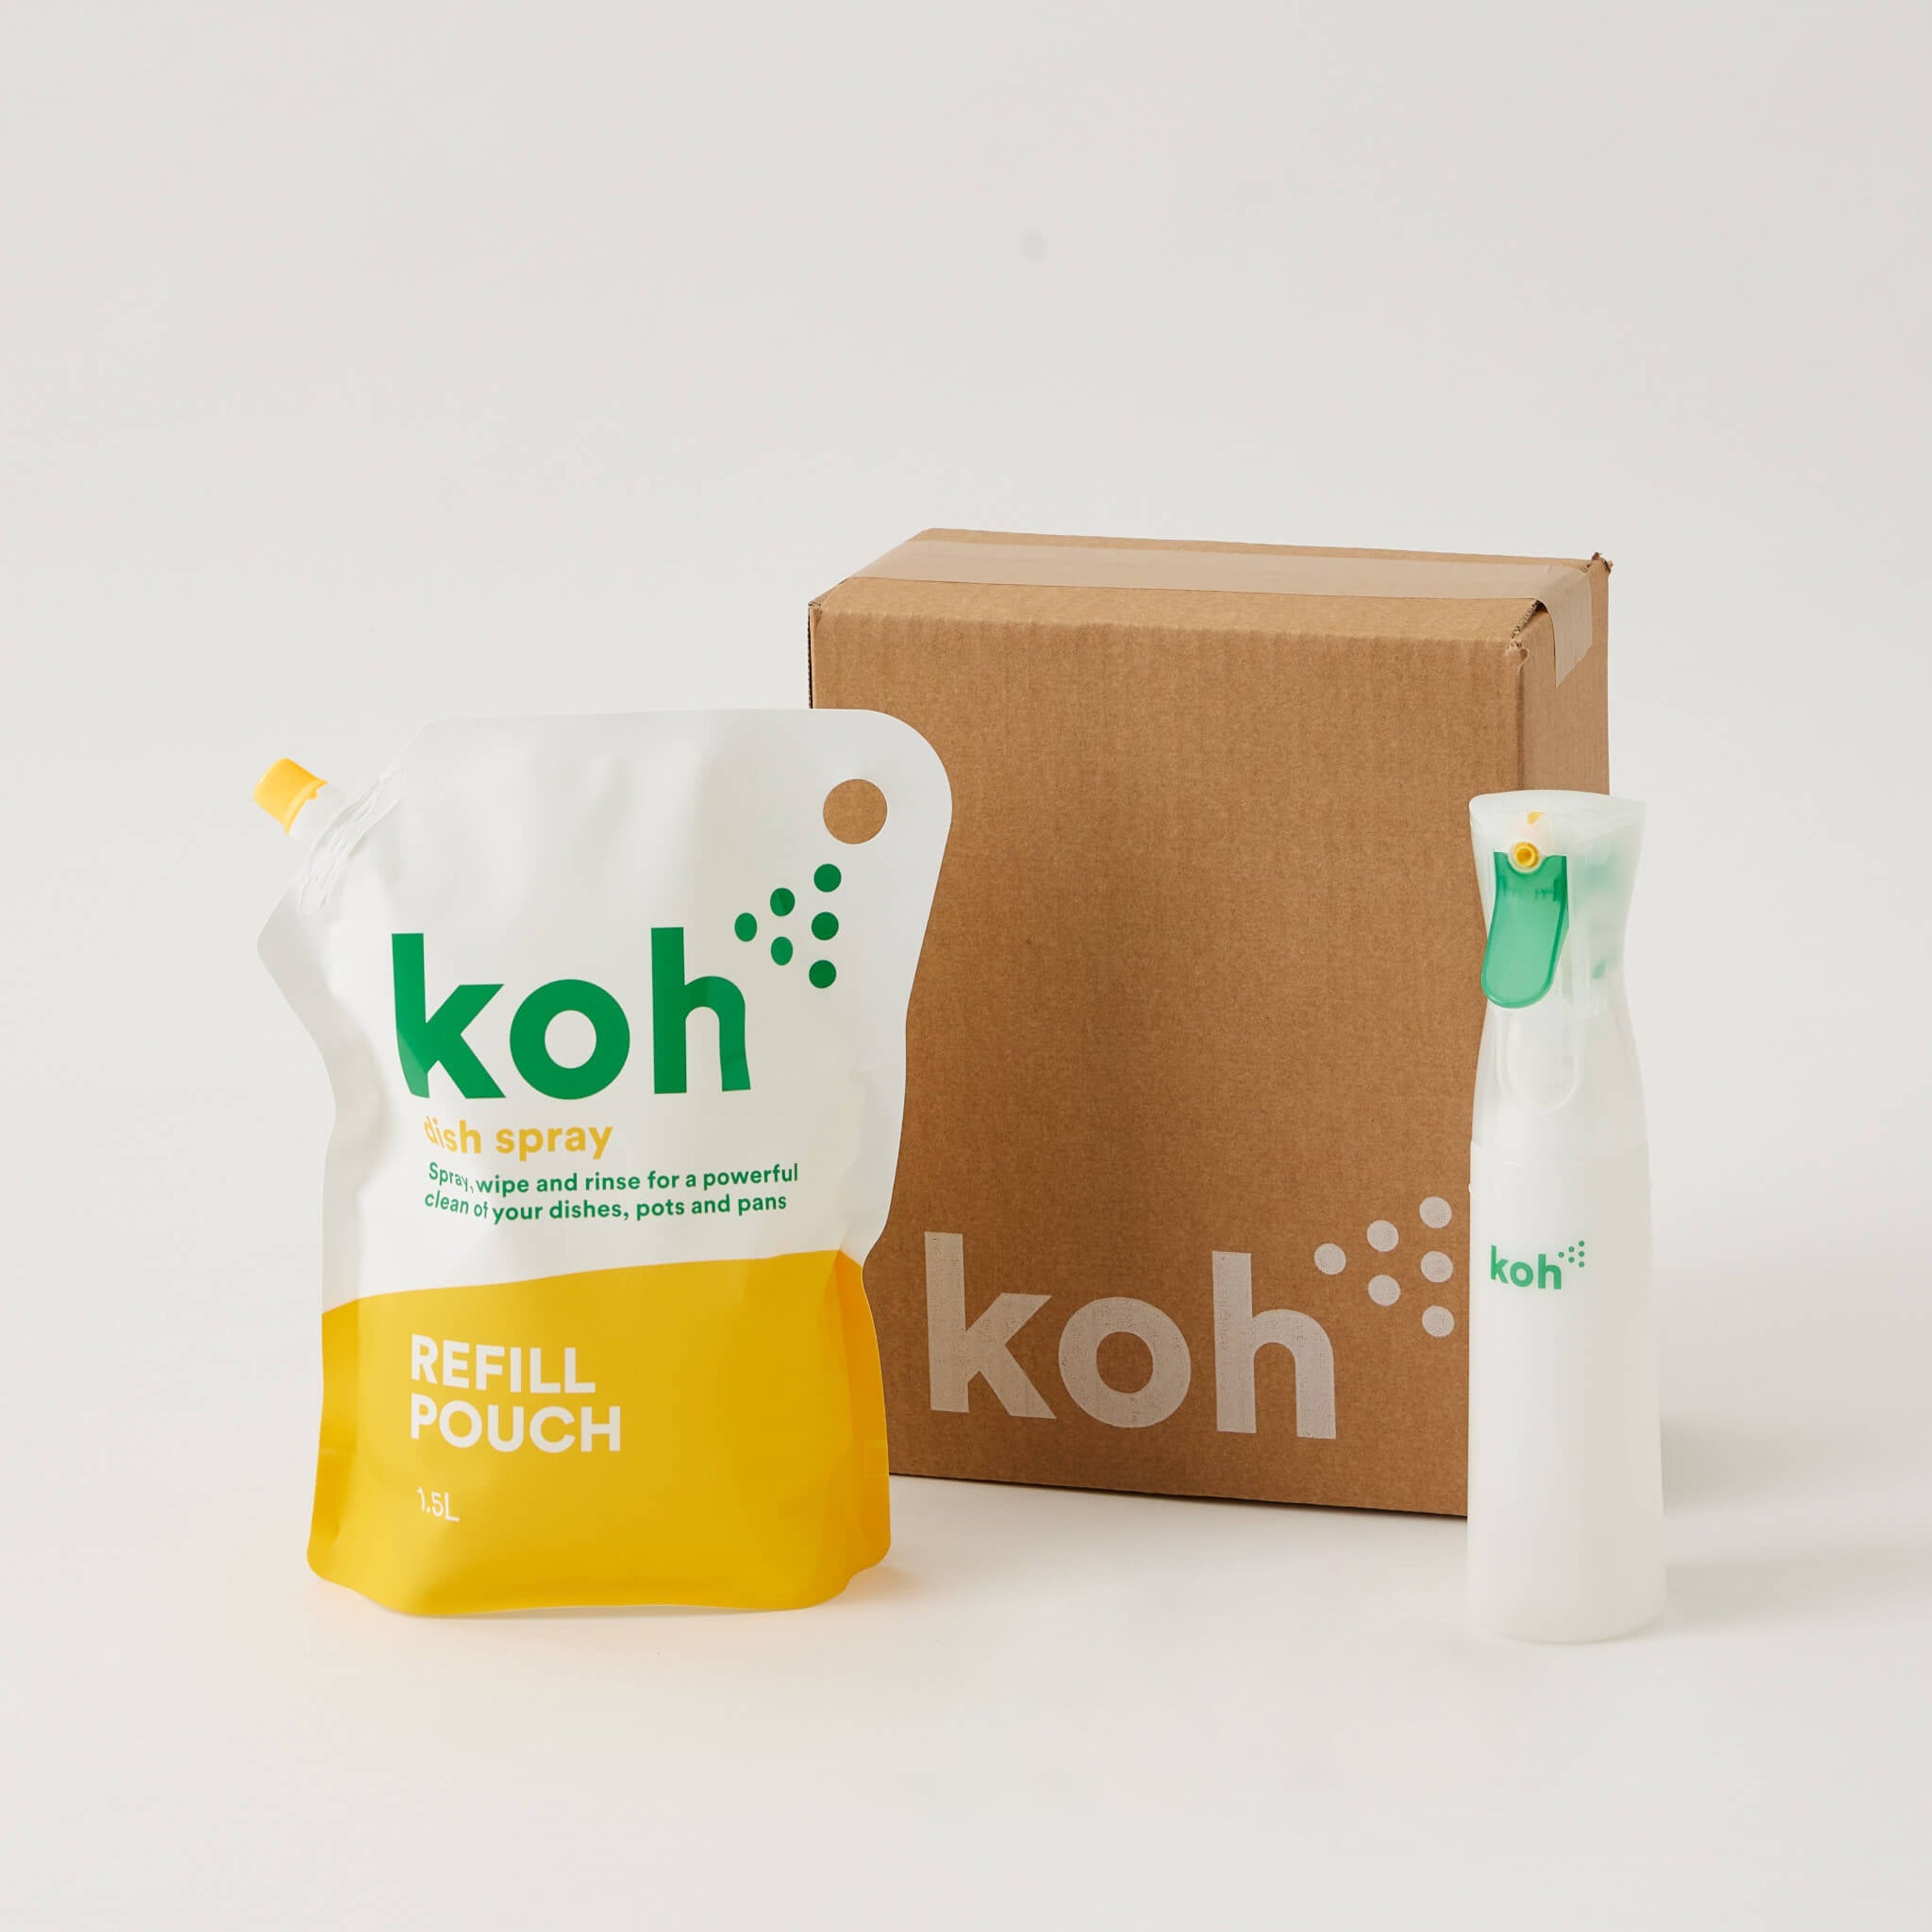 www.koh.com/products/dish-starter-kit